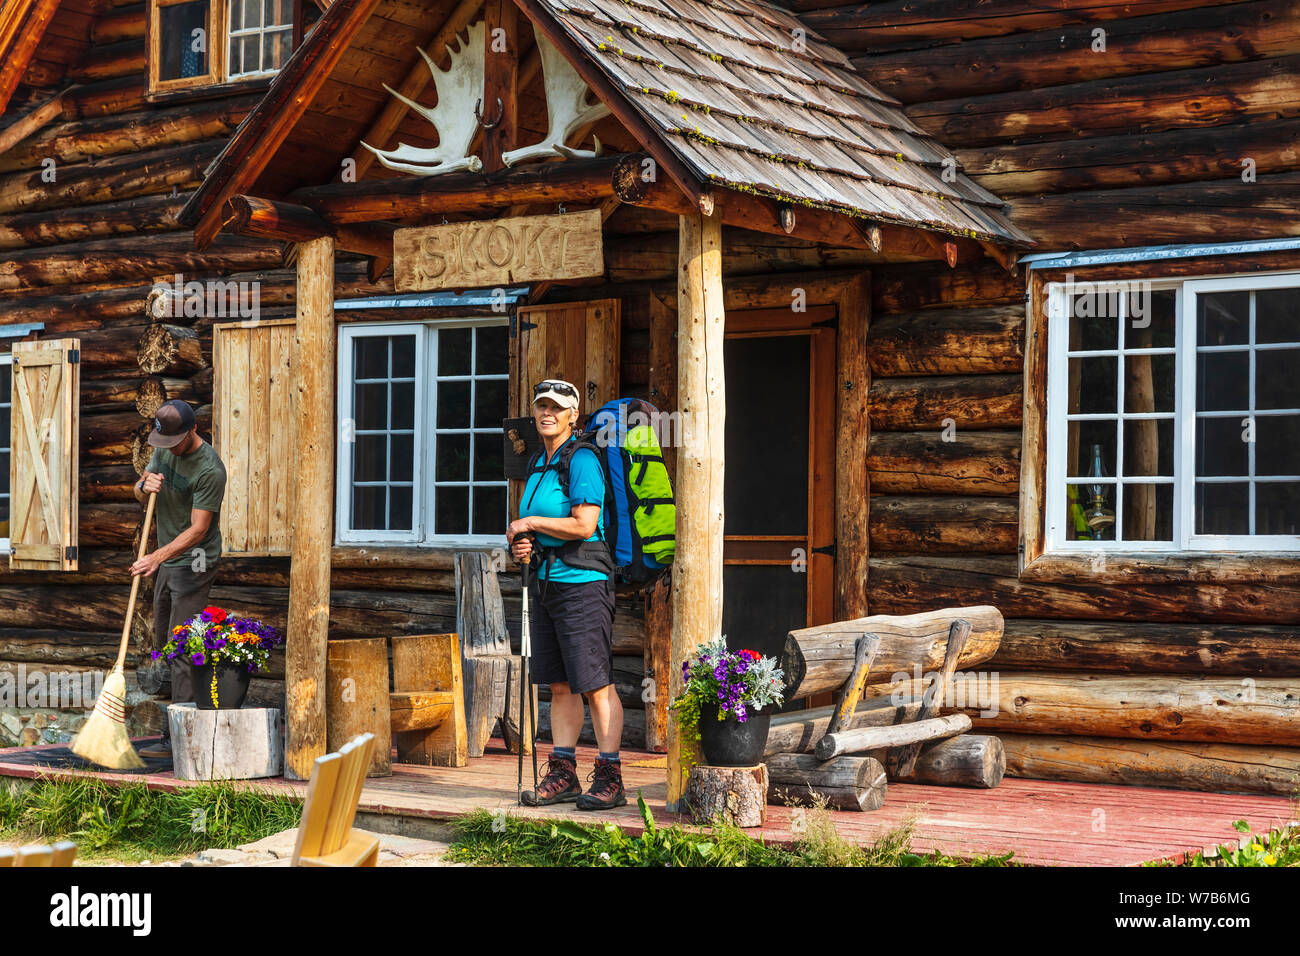 Main lodge at Skoki Ski Lodge, a remote backcountry lodge located near Lake Louise in Banff National Park, Alberta, Canada. Stock Photo